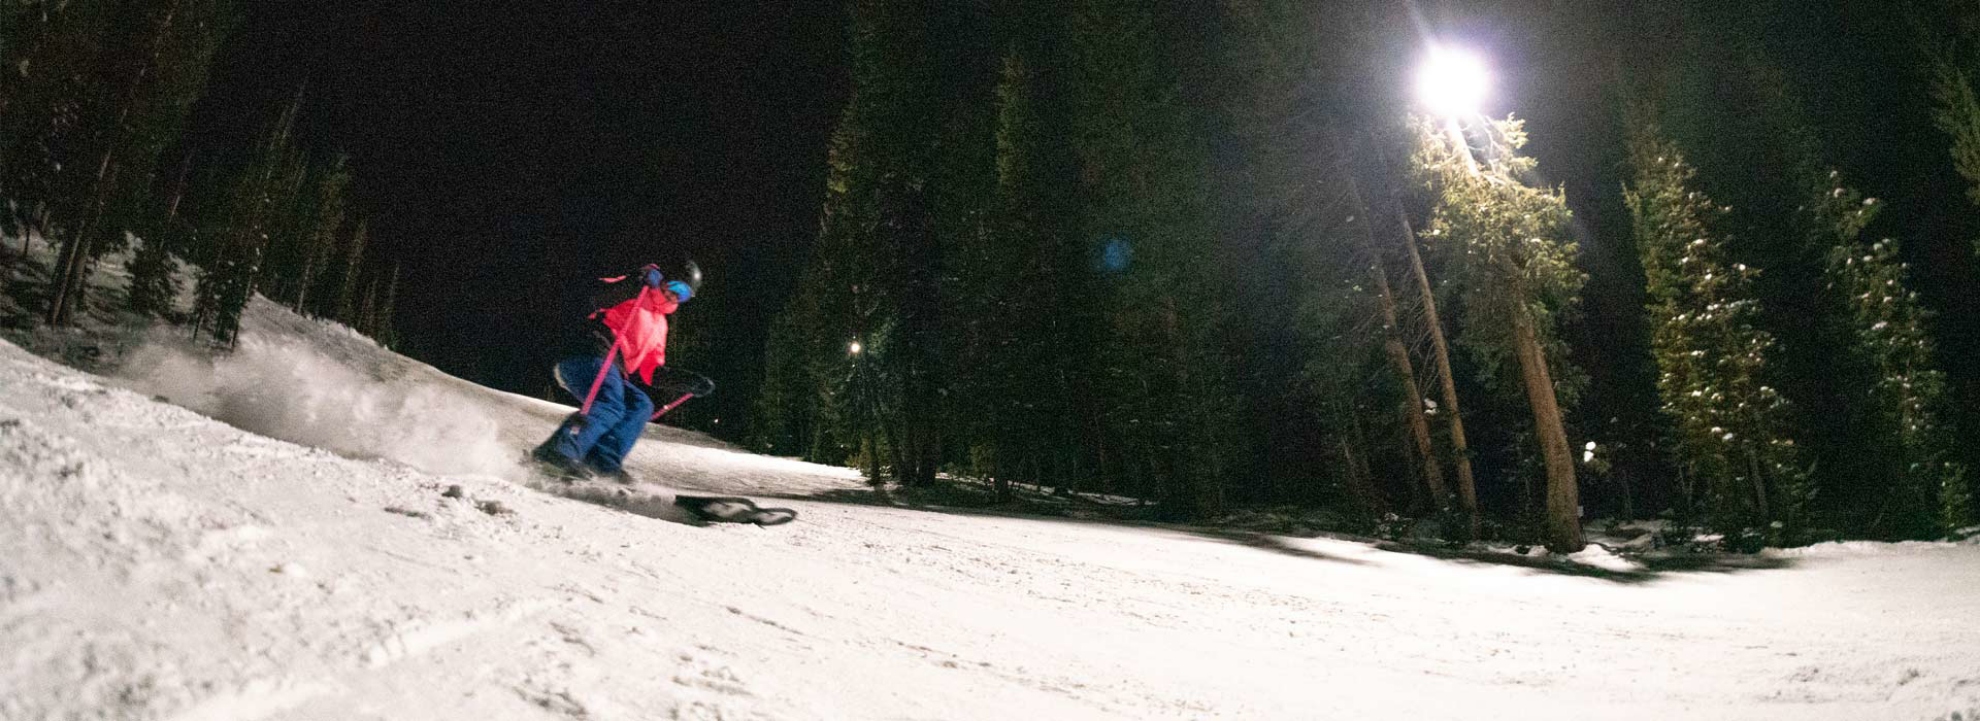 Skier riding at night at Brighton Resort, Utah